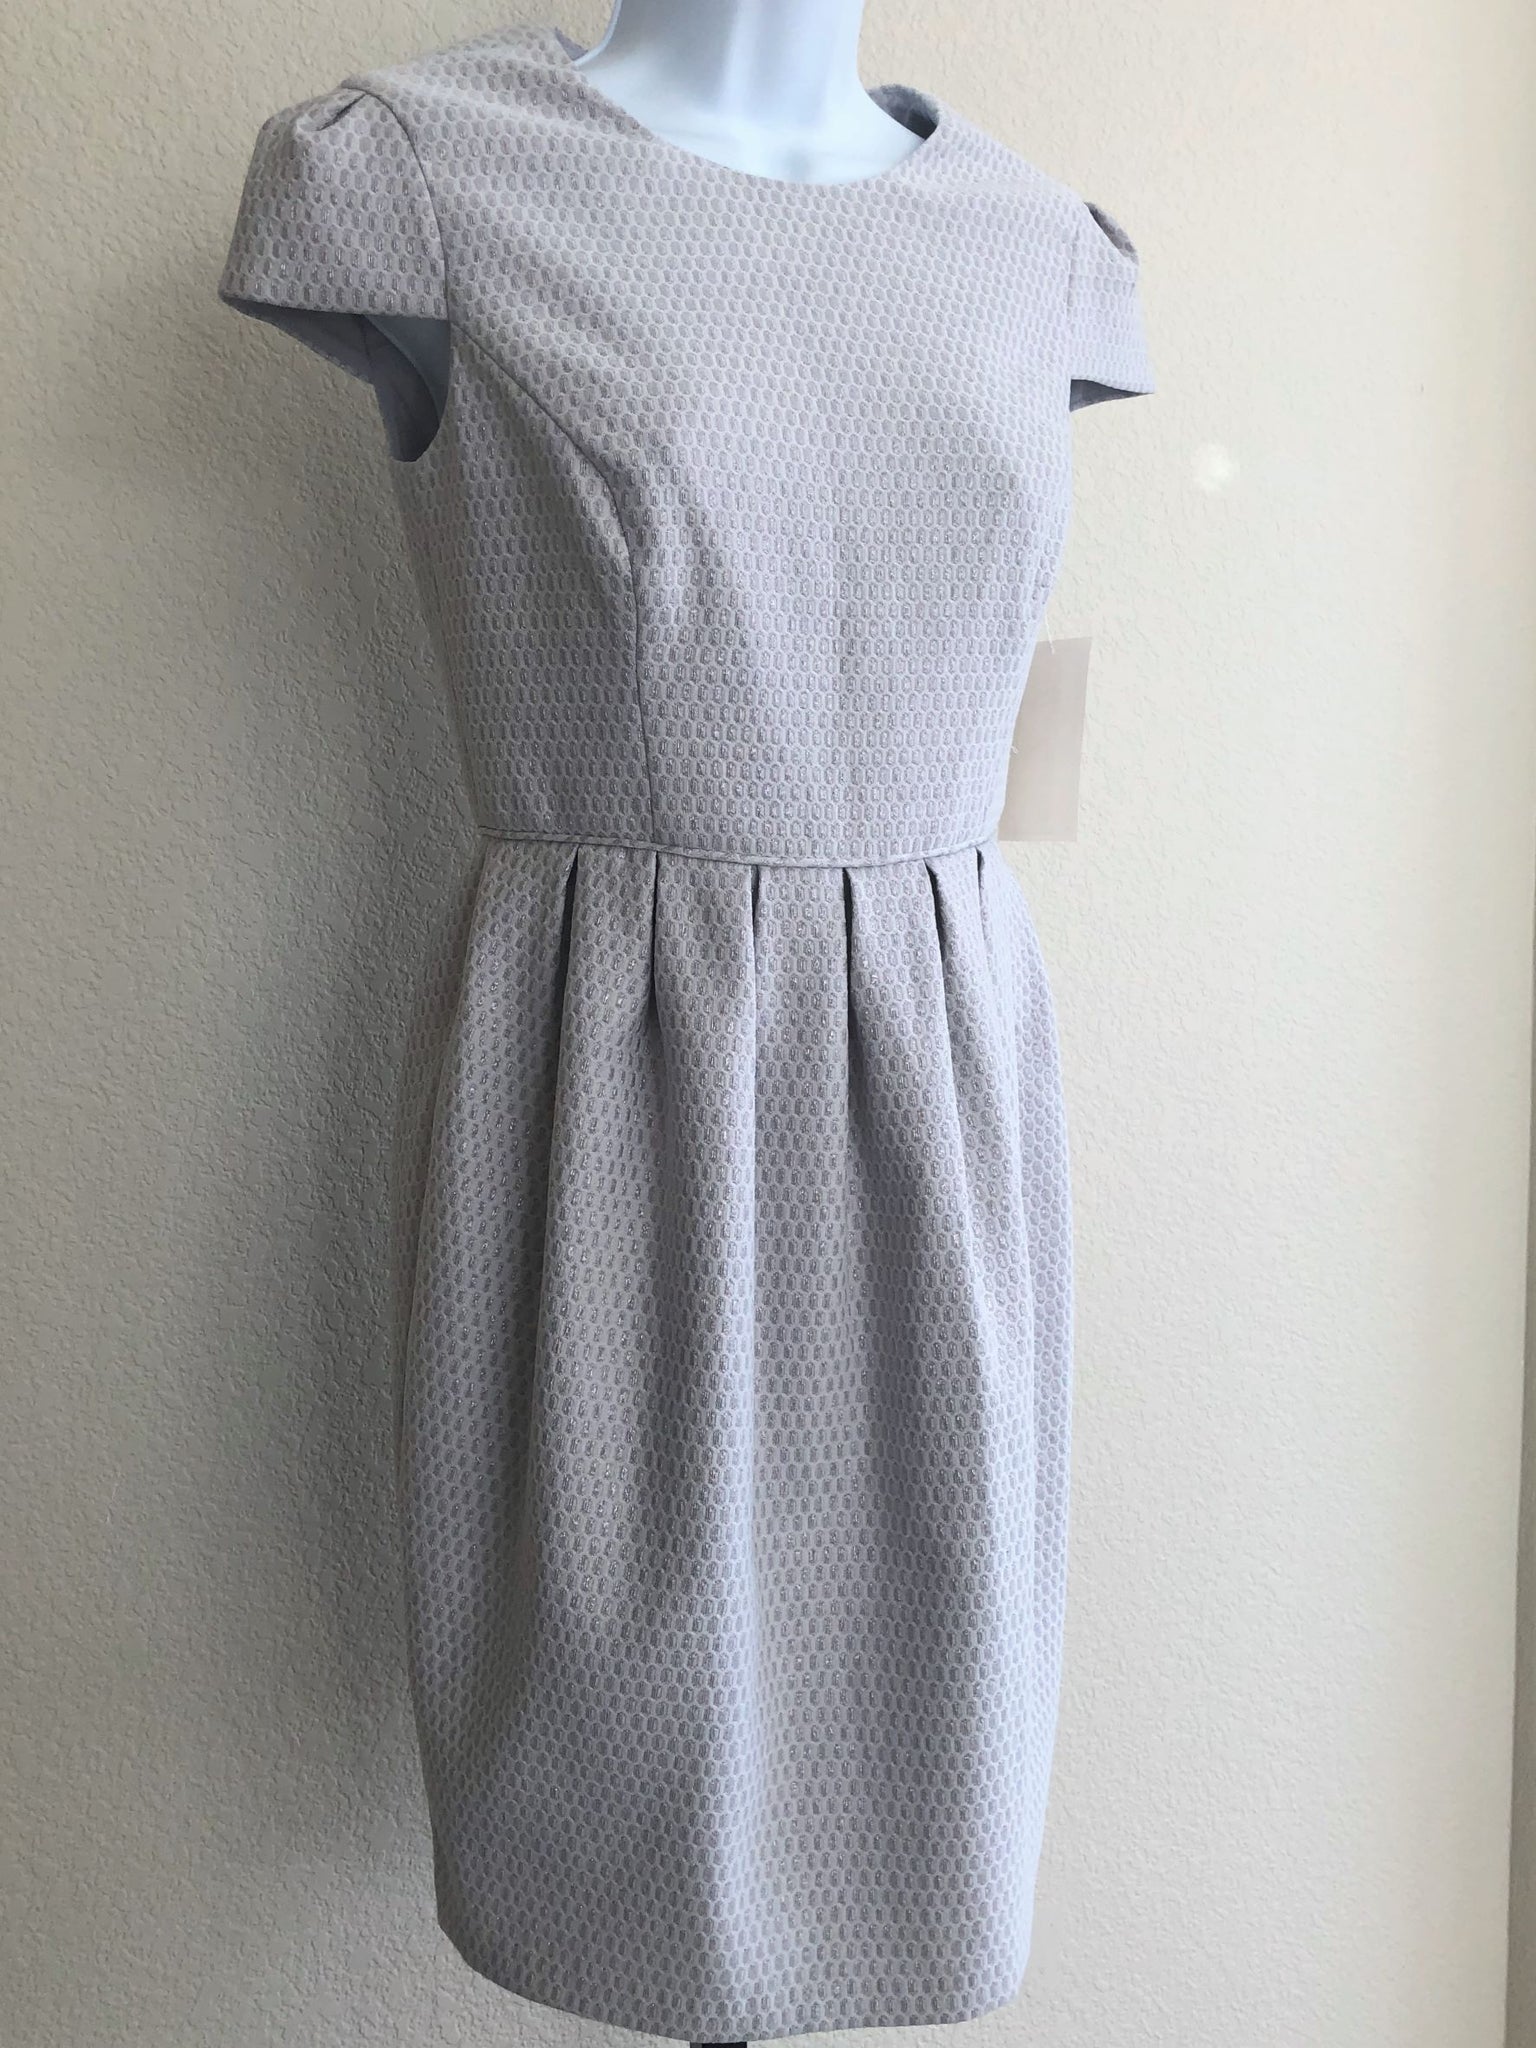 Shoshanna NEW Size 0 Silver Dots Dress